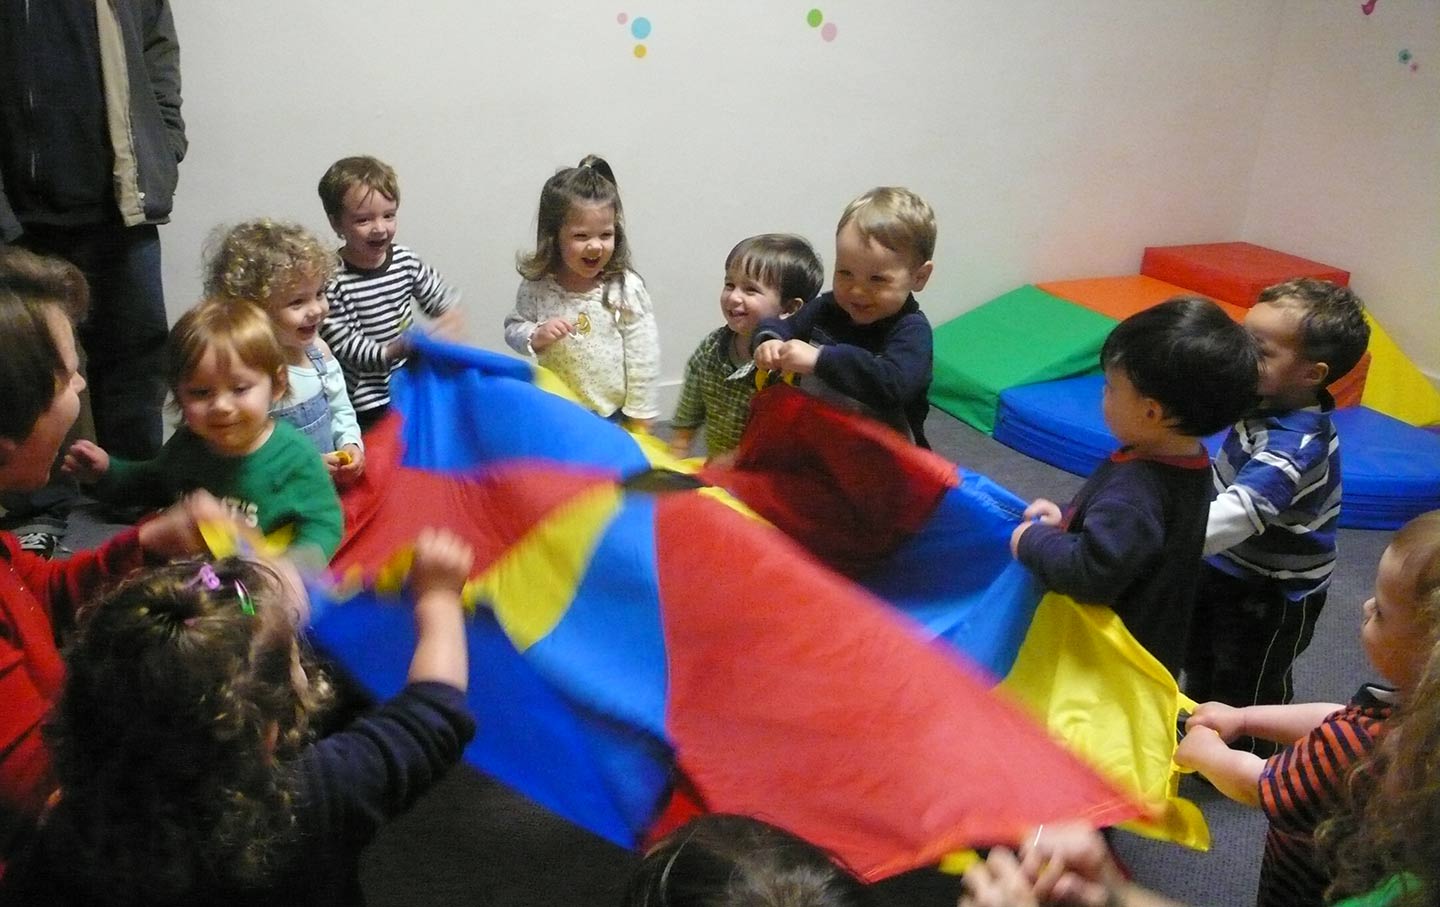 Children at a daycare in California